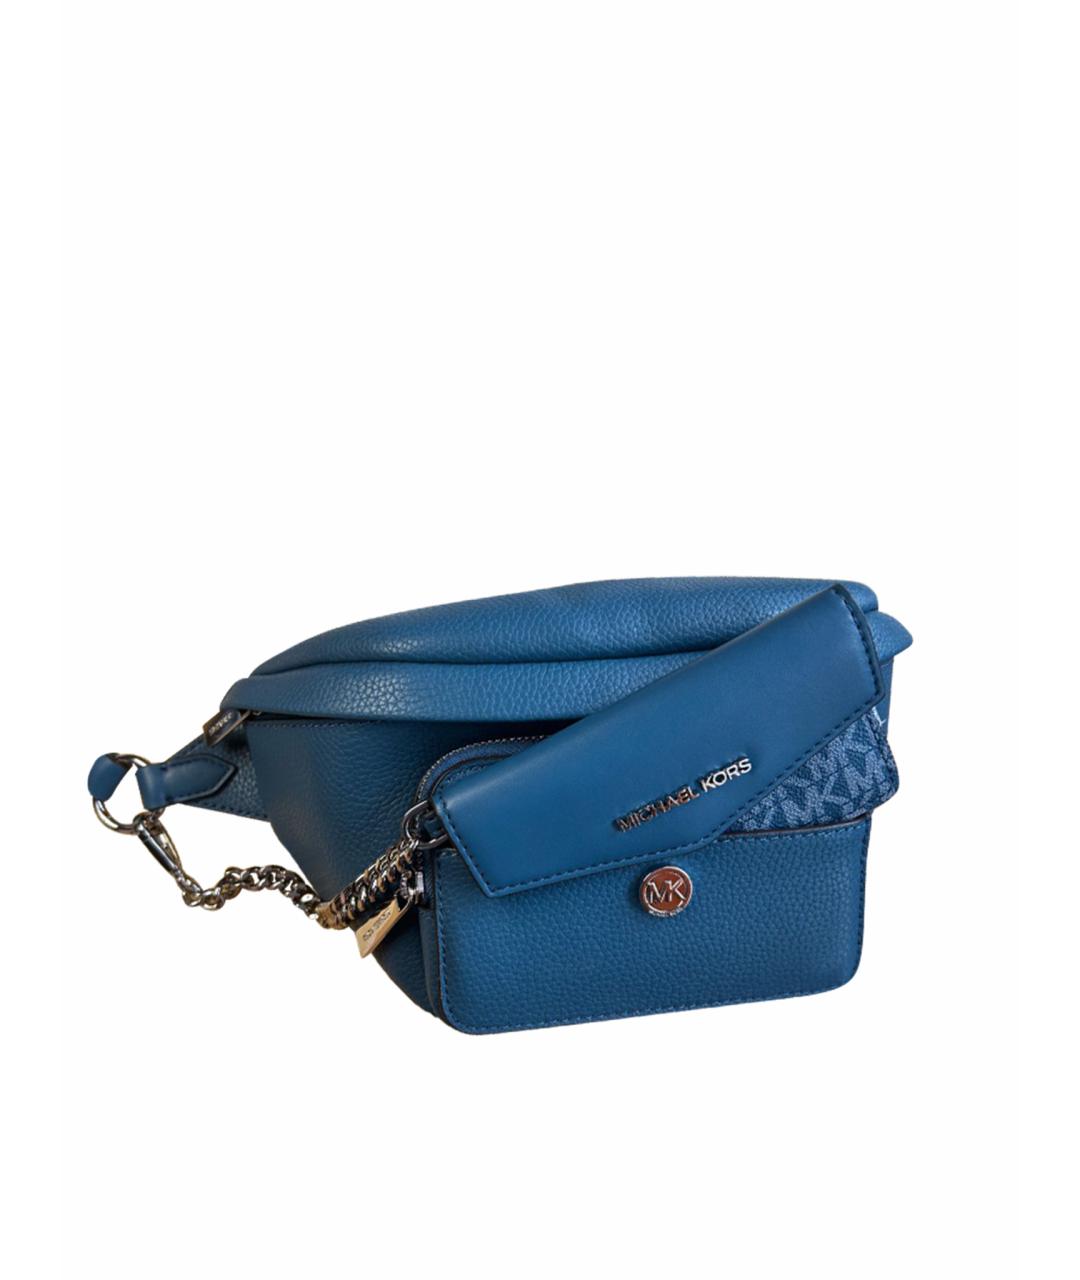 MICHAEL KORS Синяя кожаная поясная сумка, фото 1